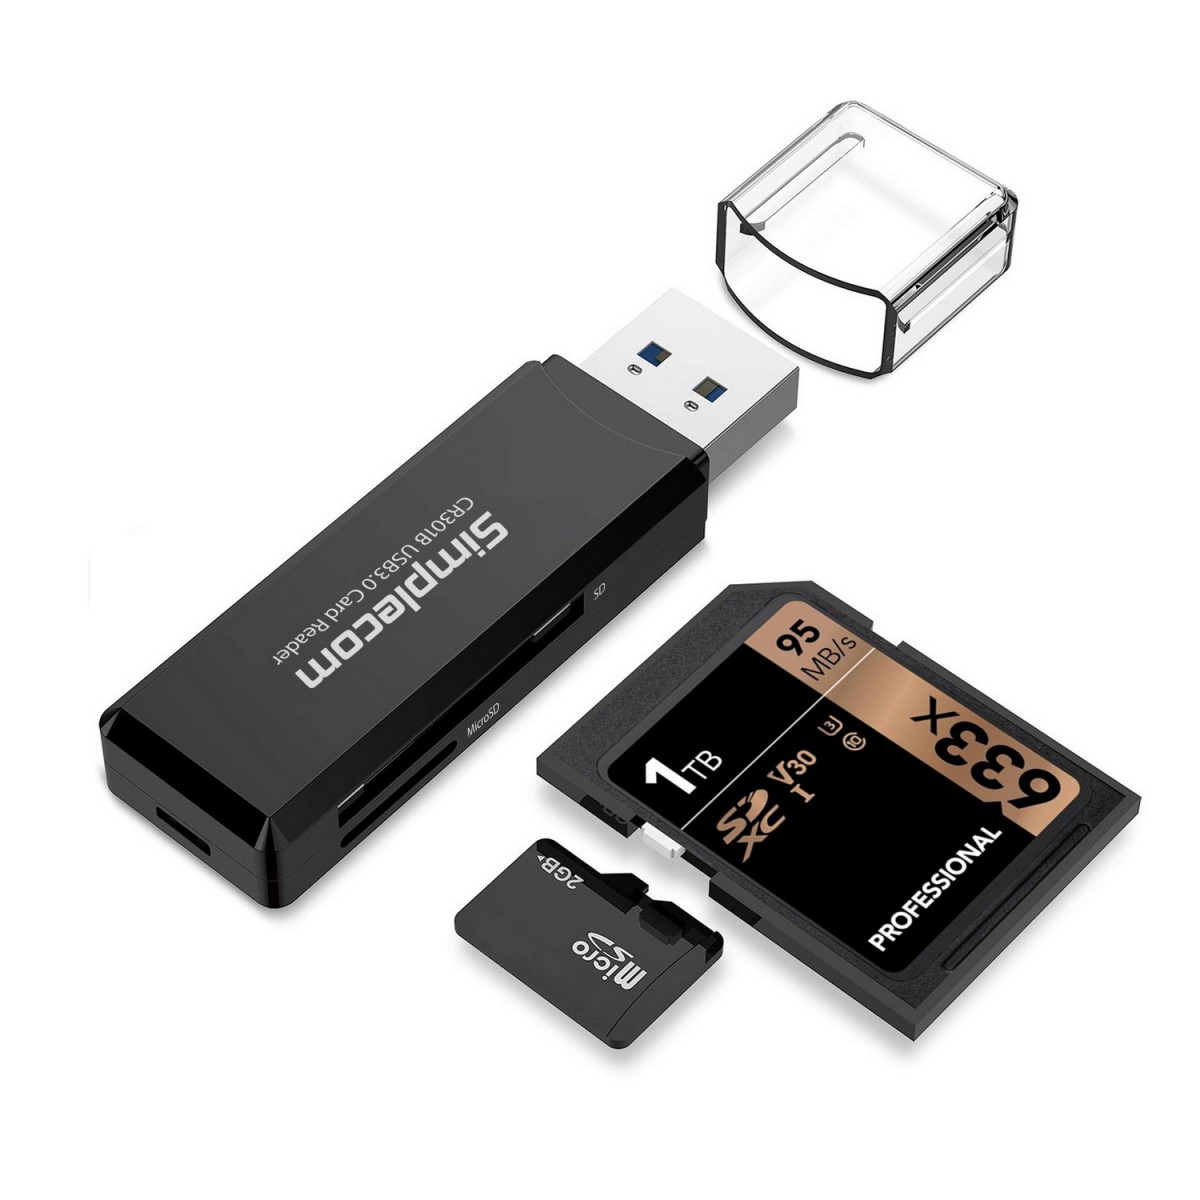  2 Slot SuperSpeed USB 3.0 Card Reader  